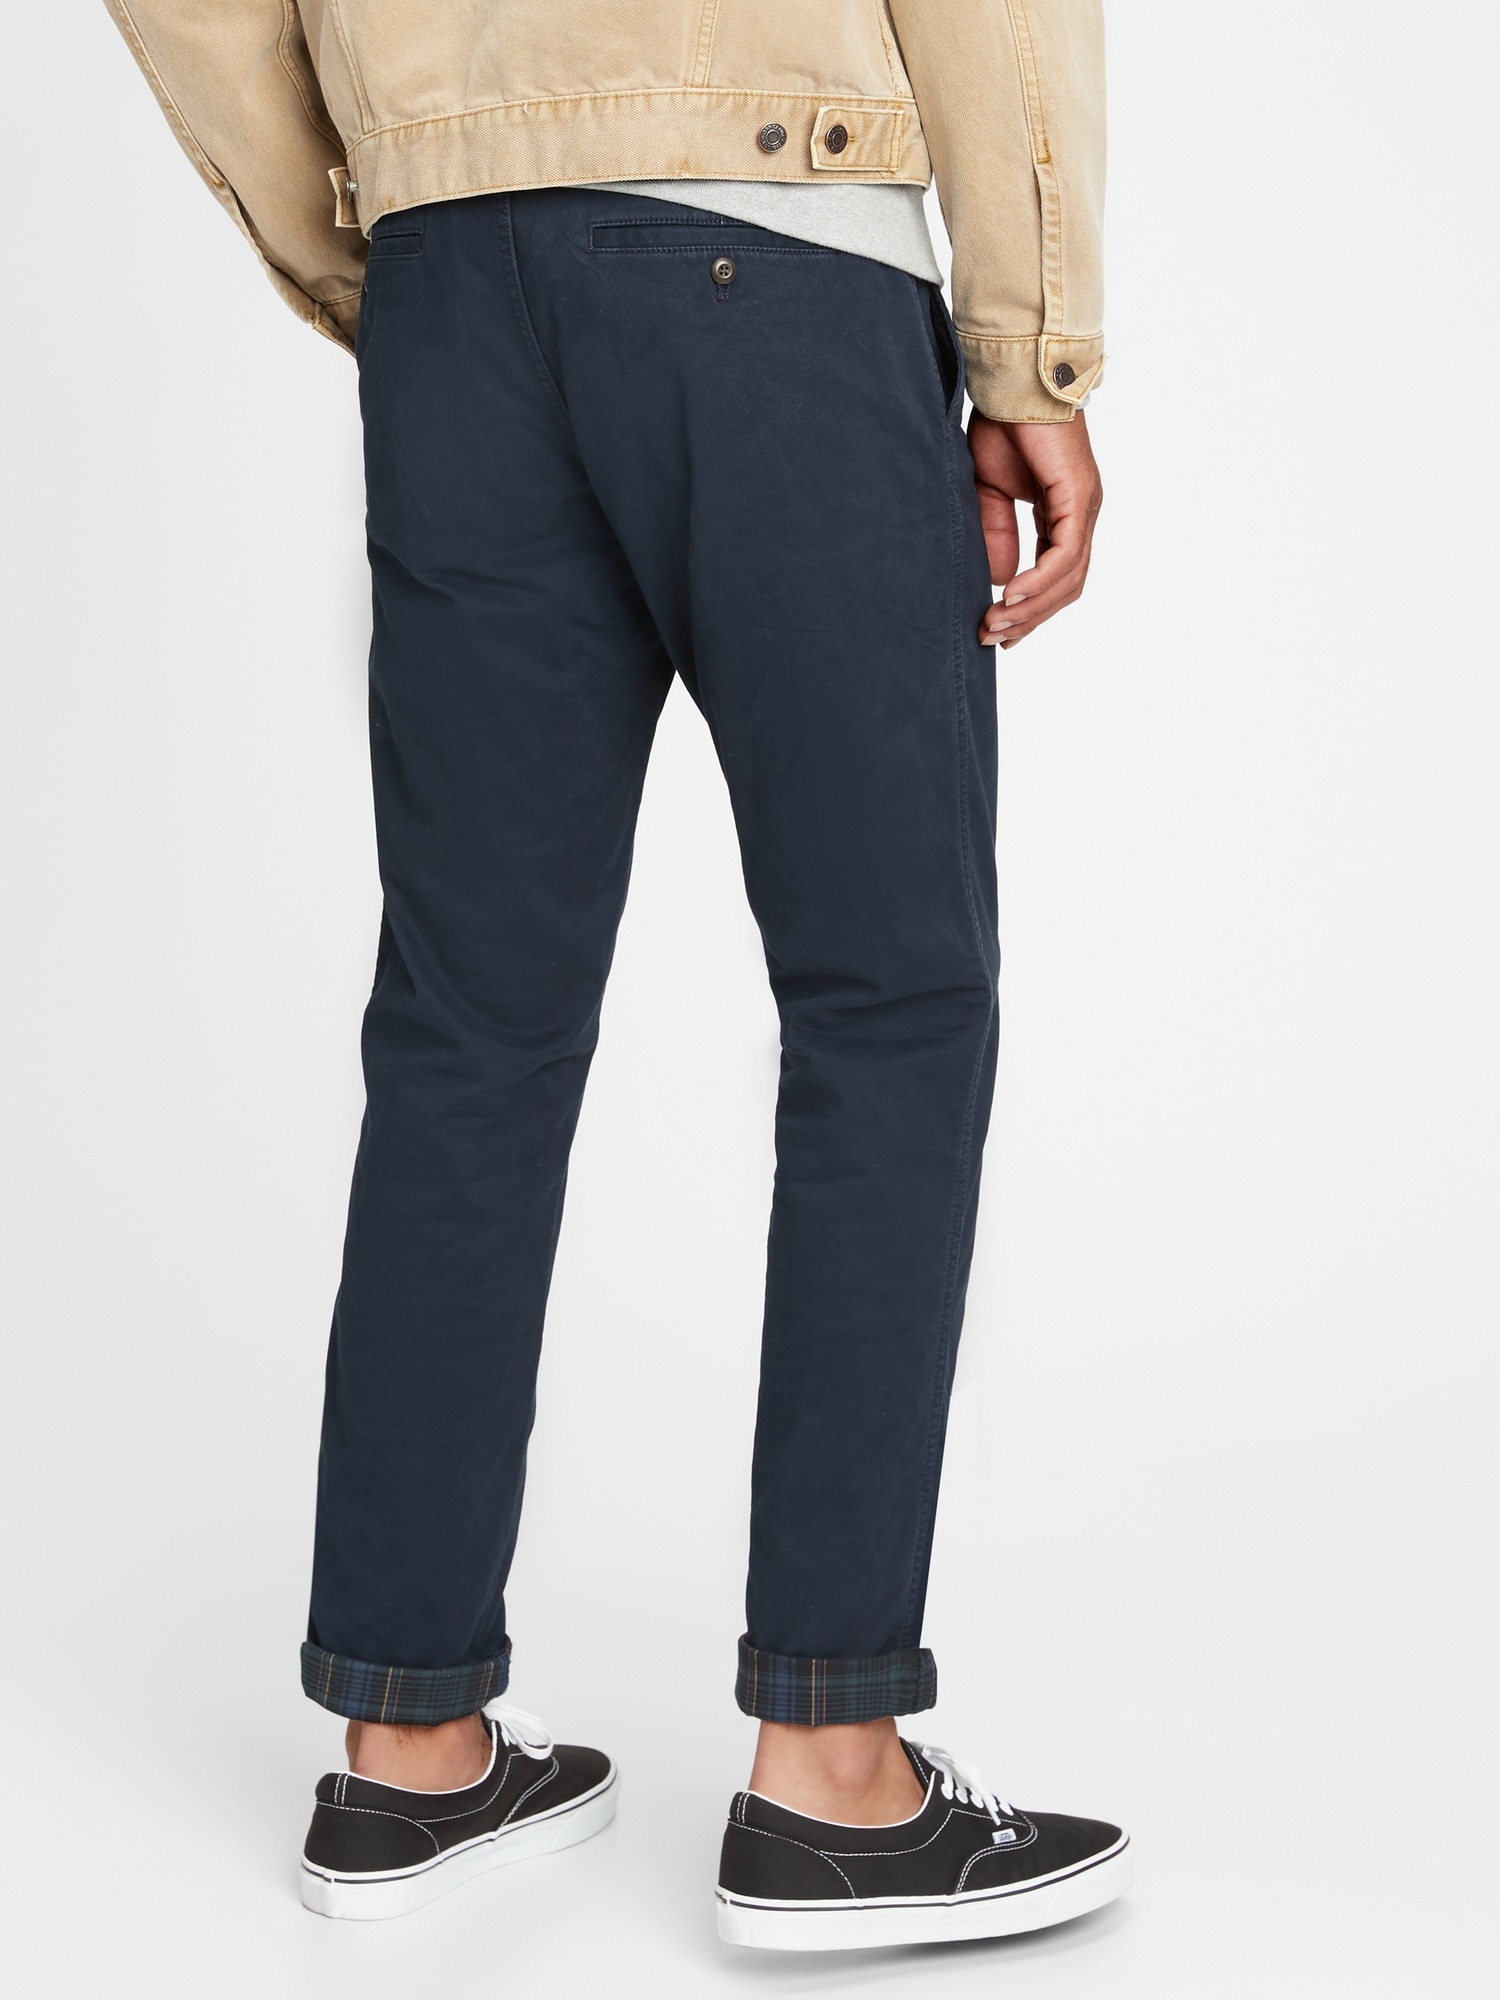 gap flannel lined pants